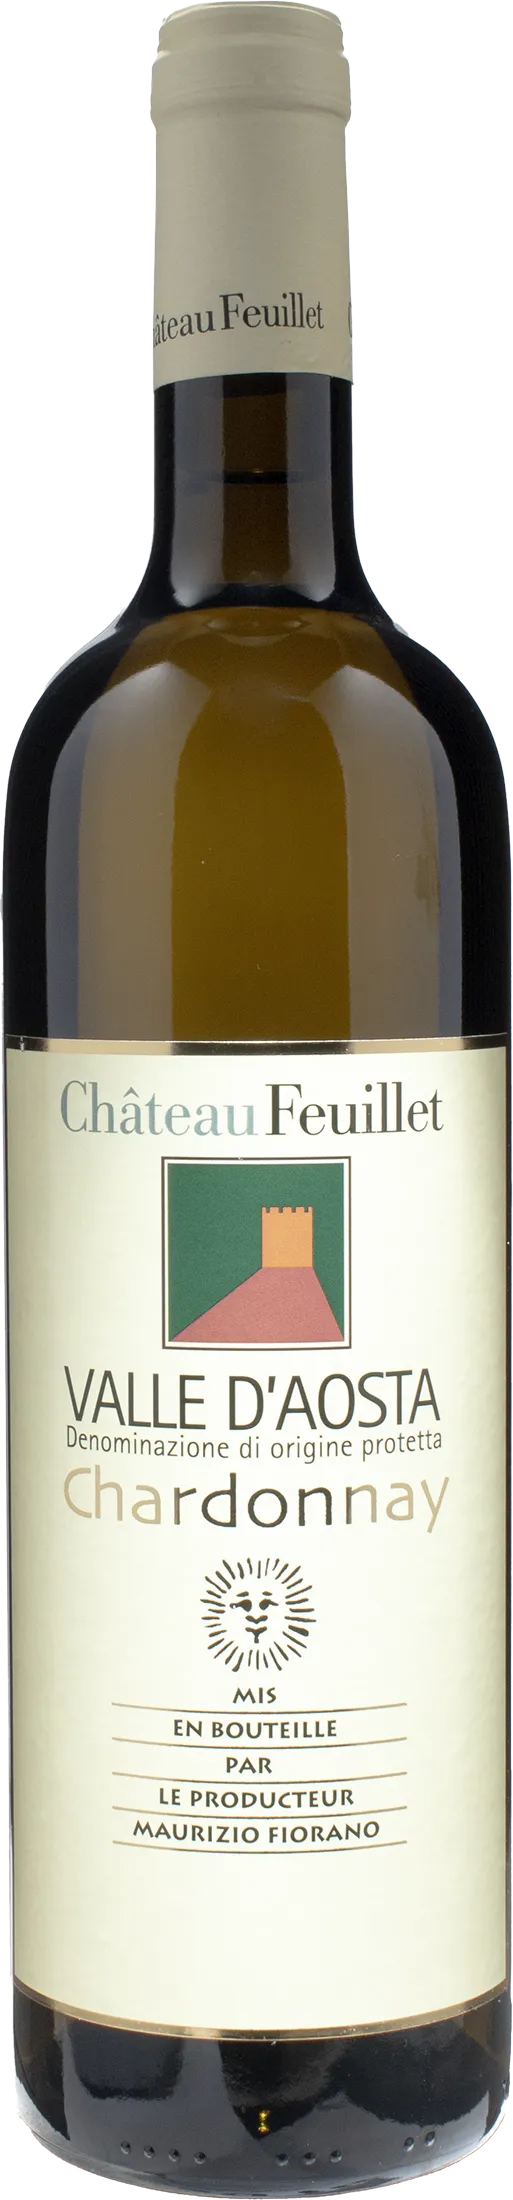 Chateau Feuillet Chardonnay